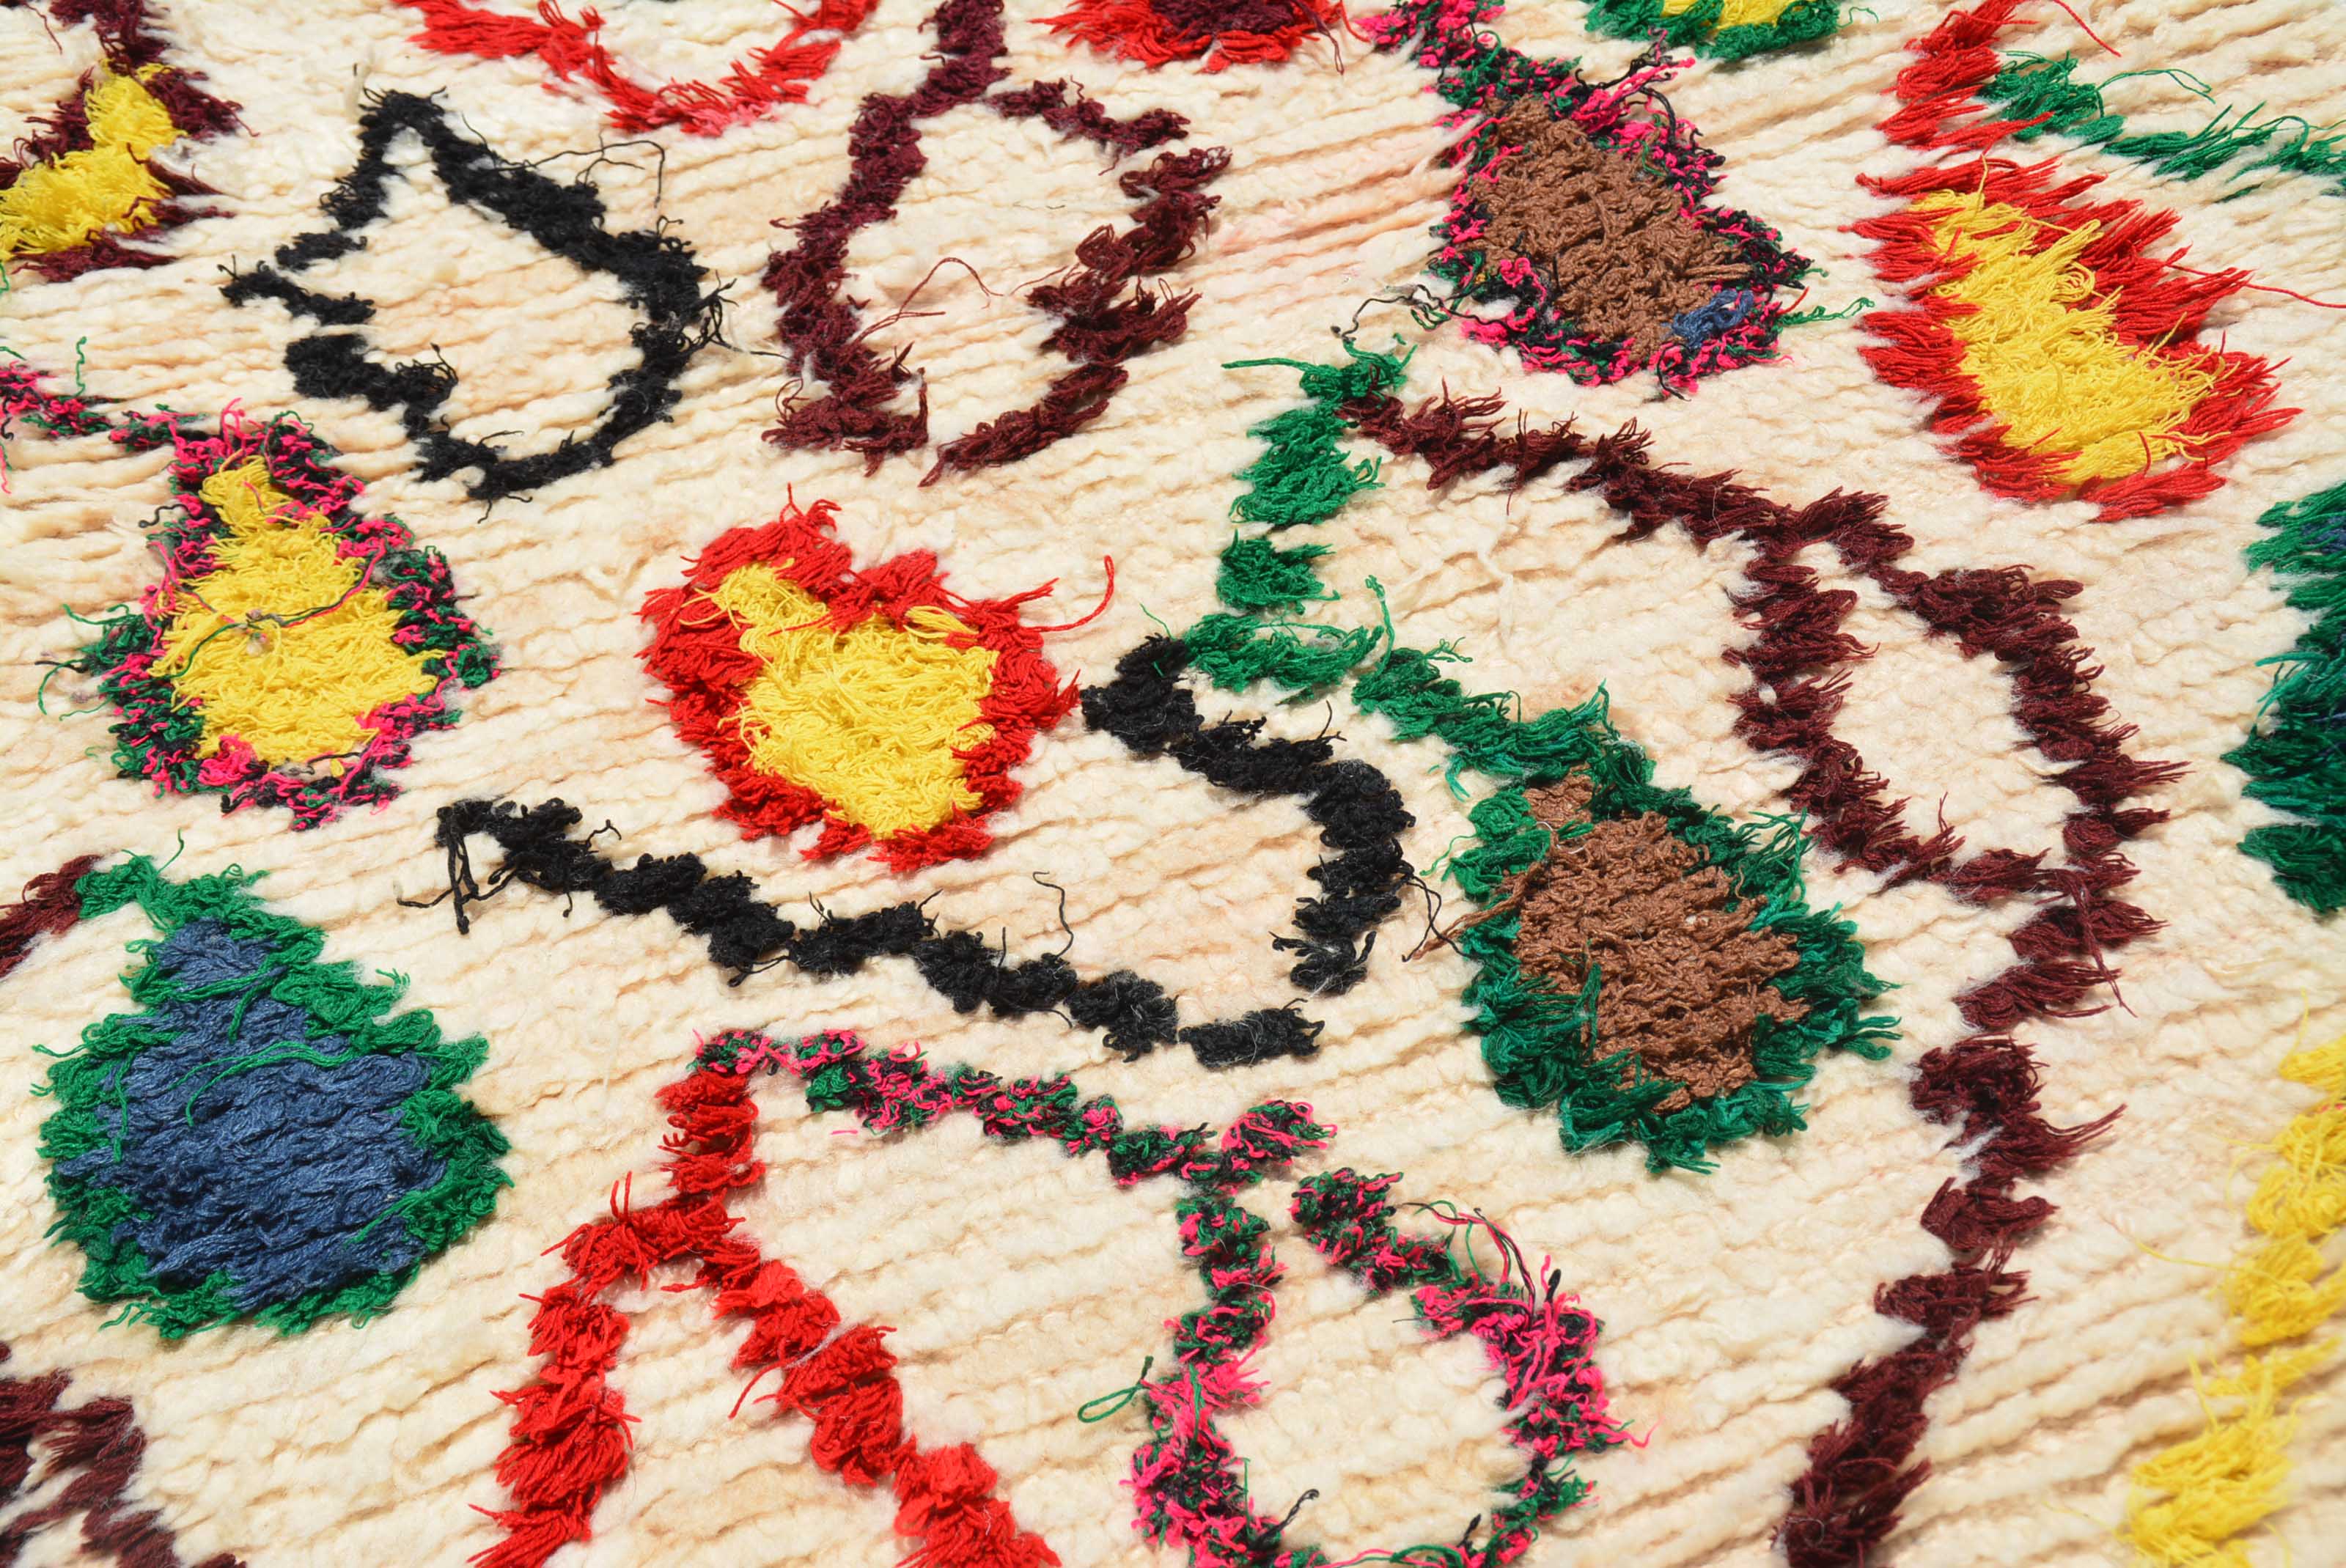 Vintage Moroccan Rug Buy Modern Handmade Moroccan Rugs | Vintage Latch Hook Rug Kits | Illuminate Collective illuminate collective 